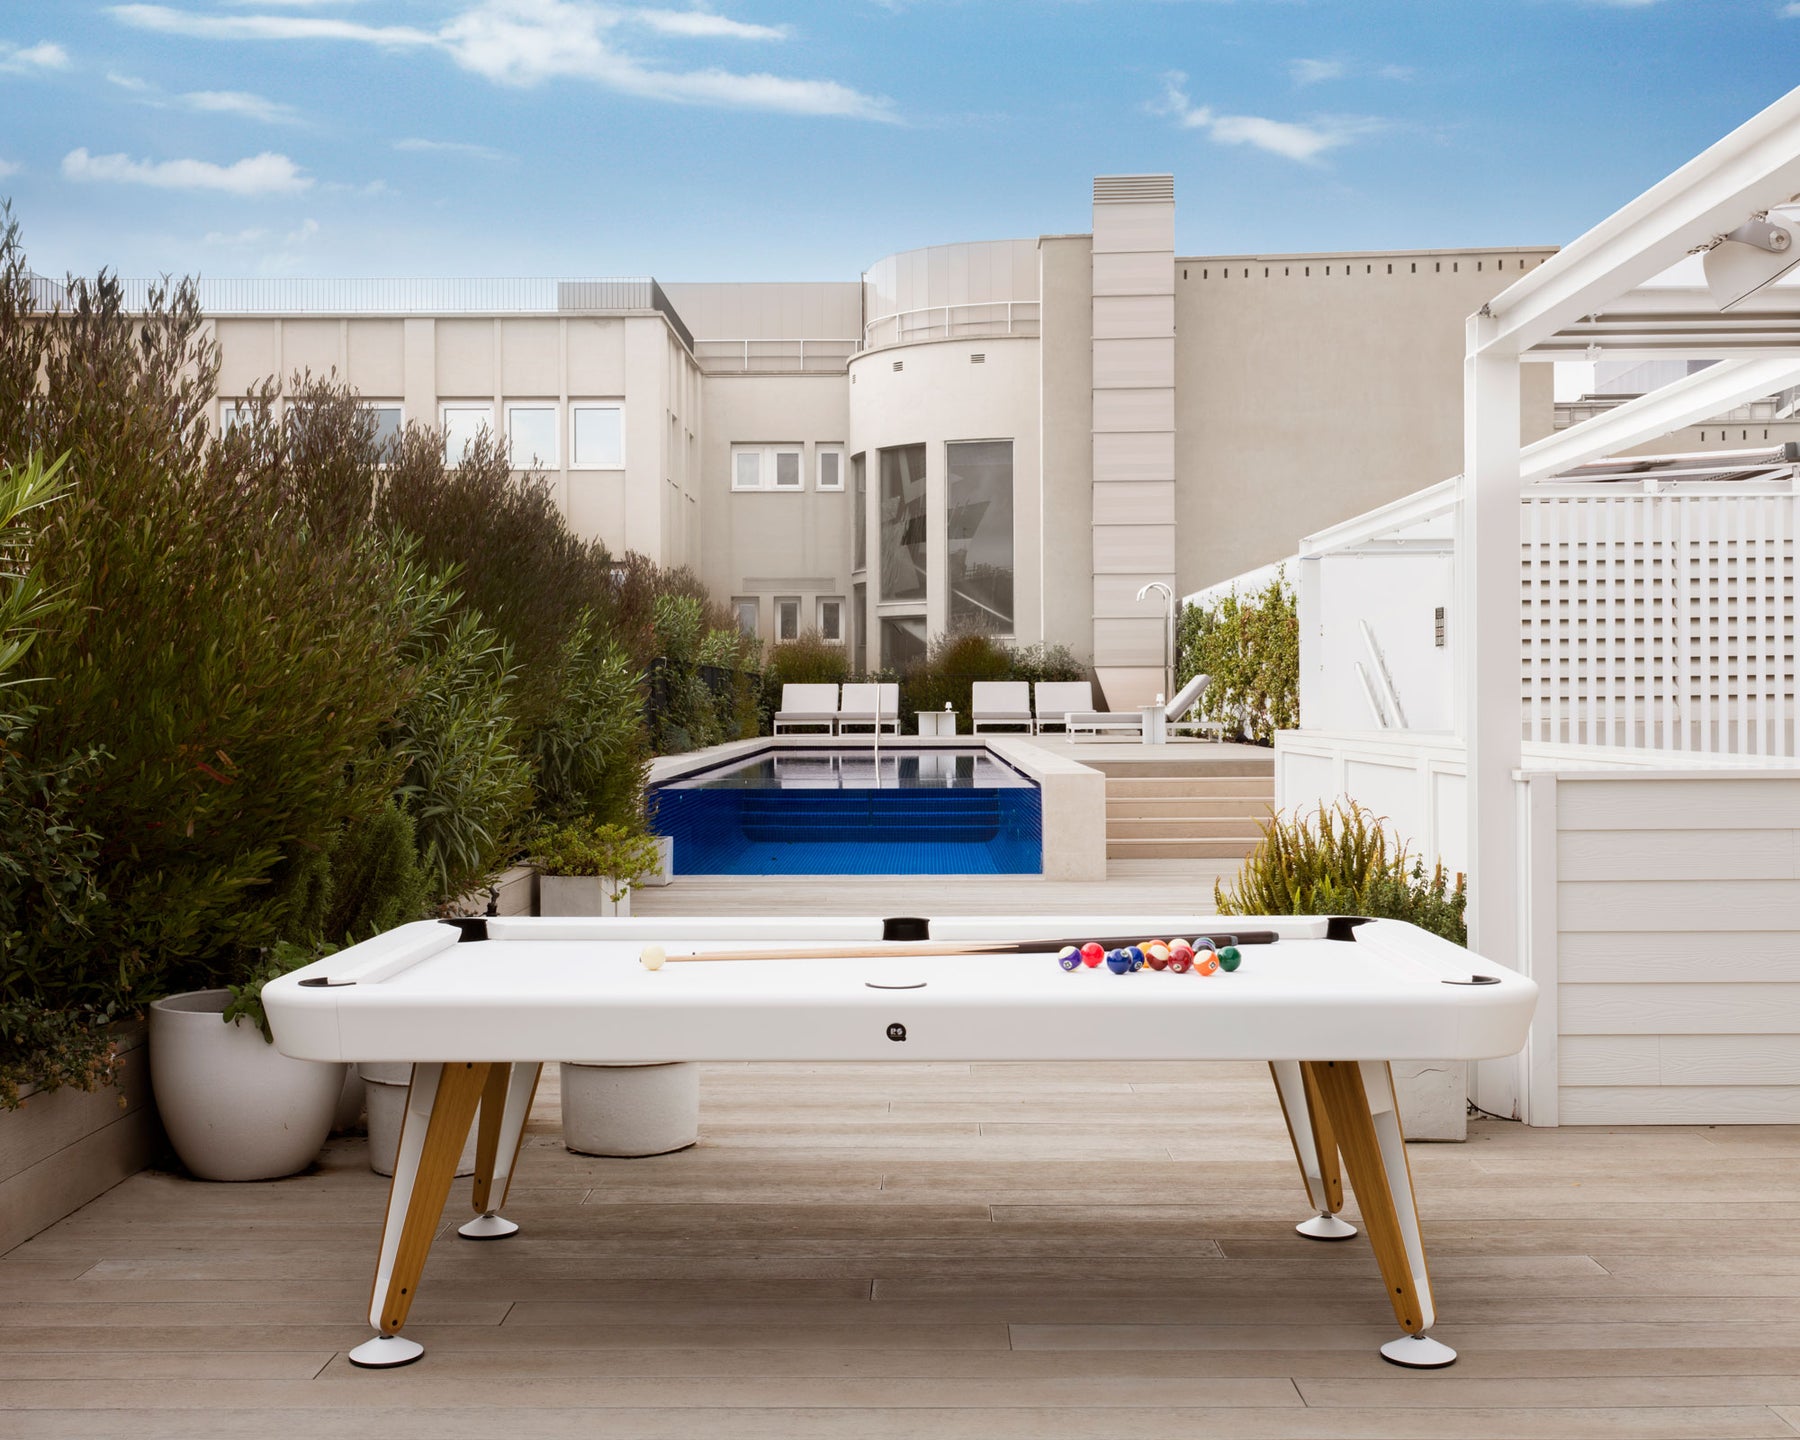 Diagonal Pool Table - Outdoor